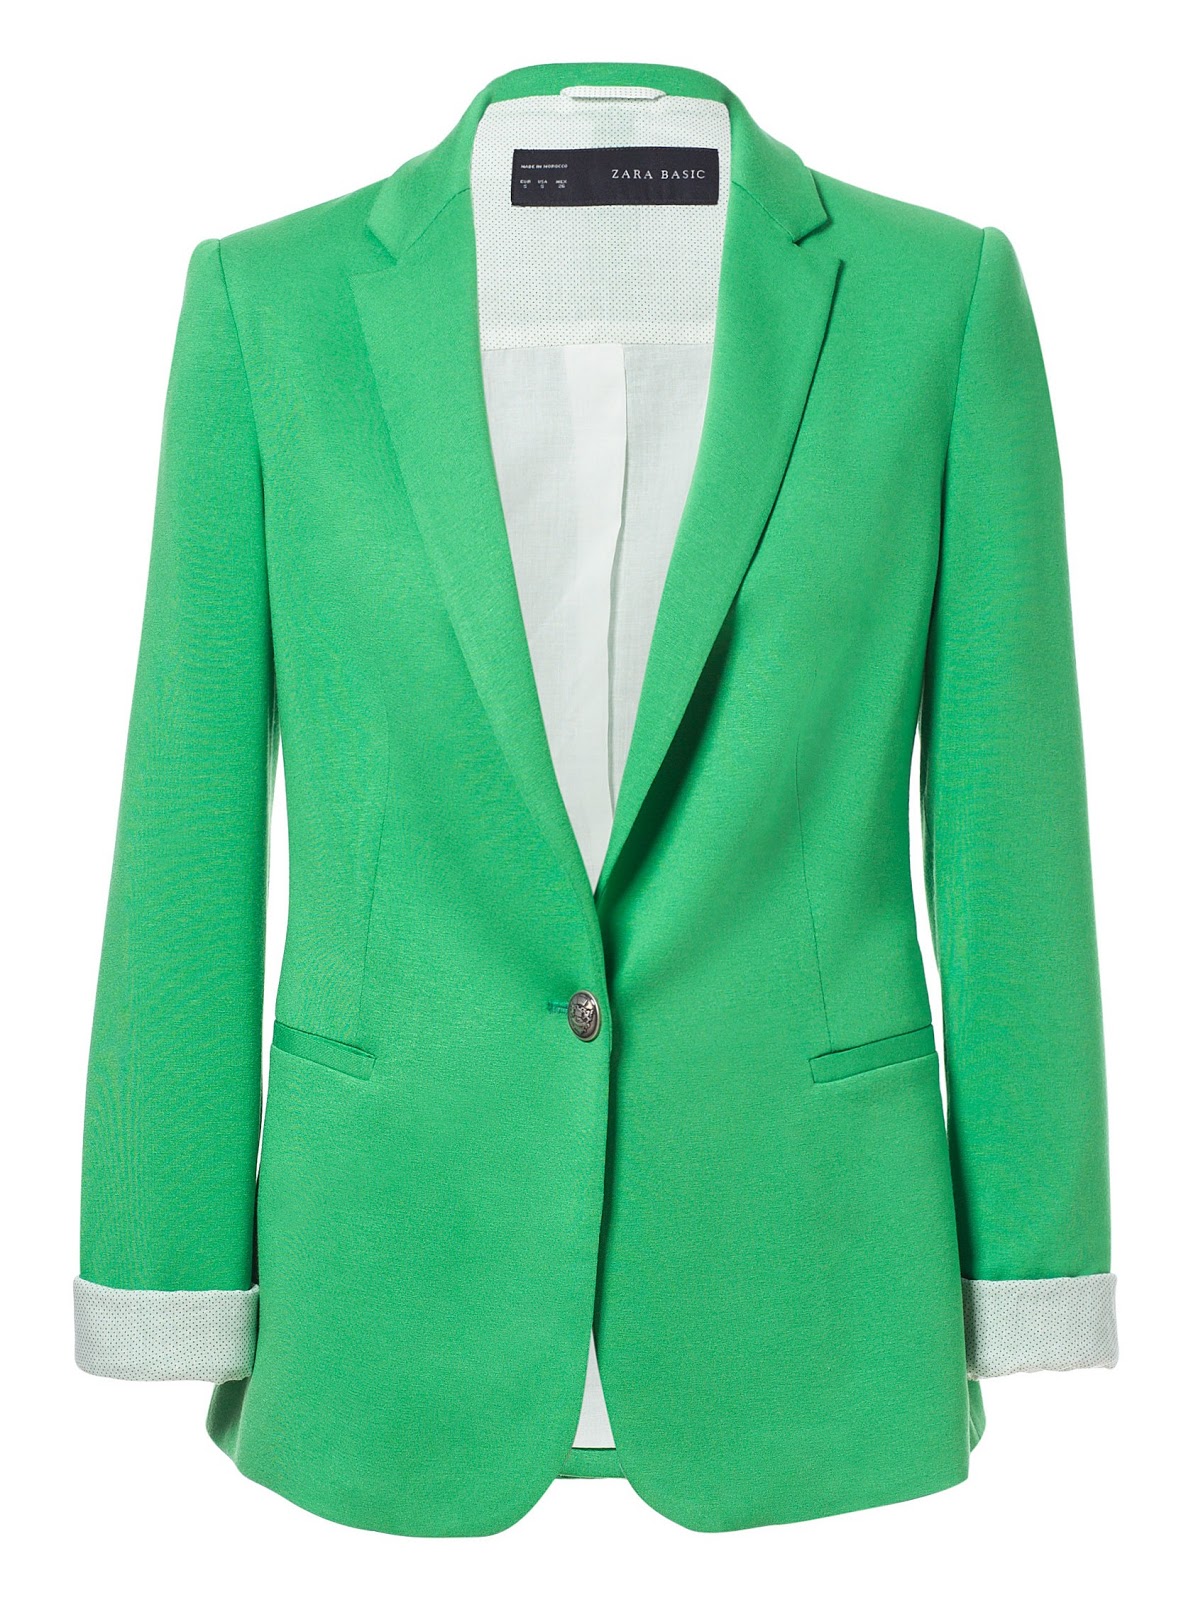 Fallon Confidential: Spring Style Staple: A Colored Blazer